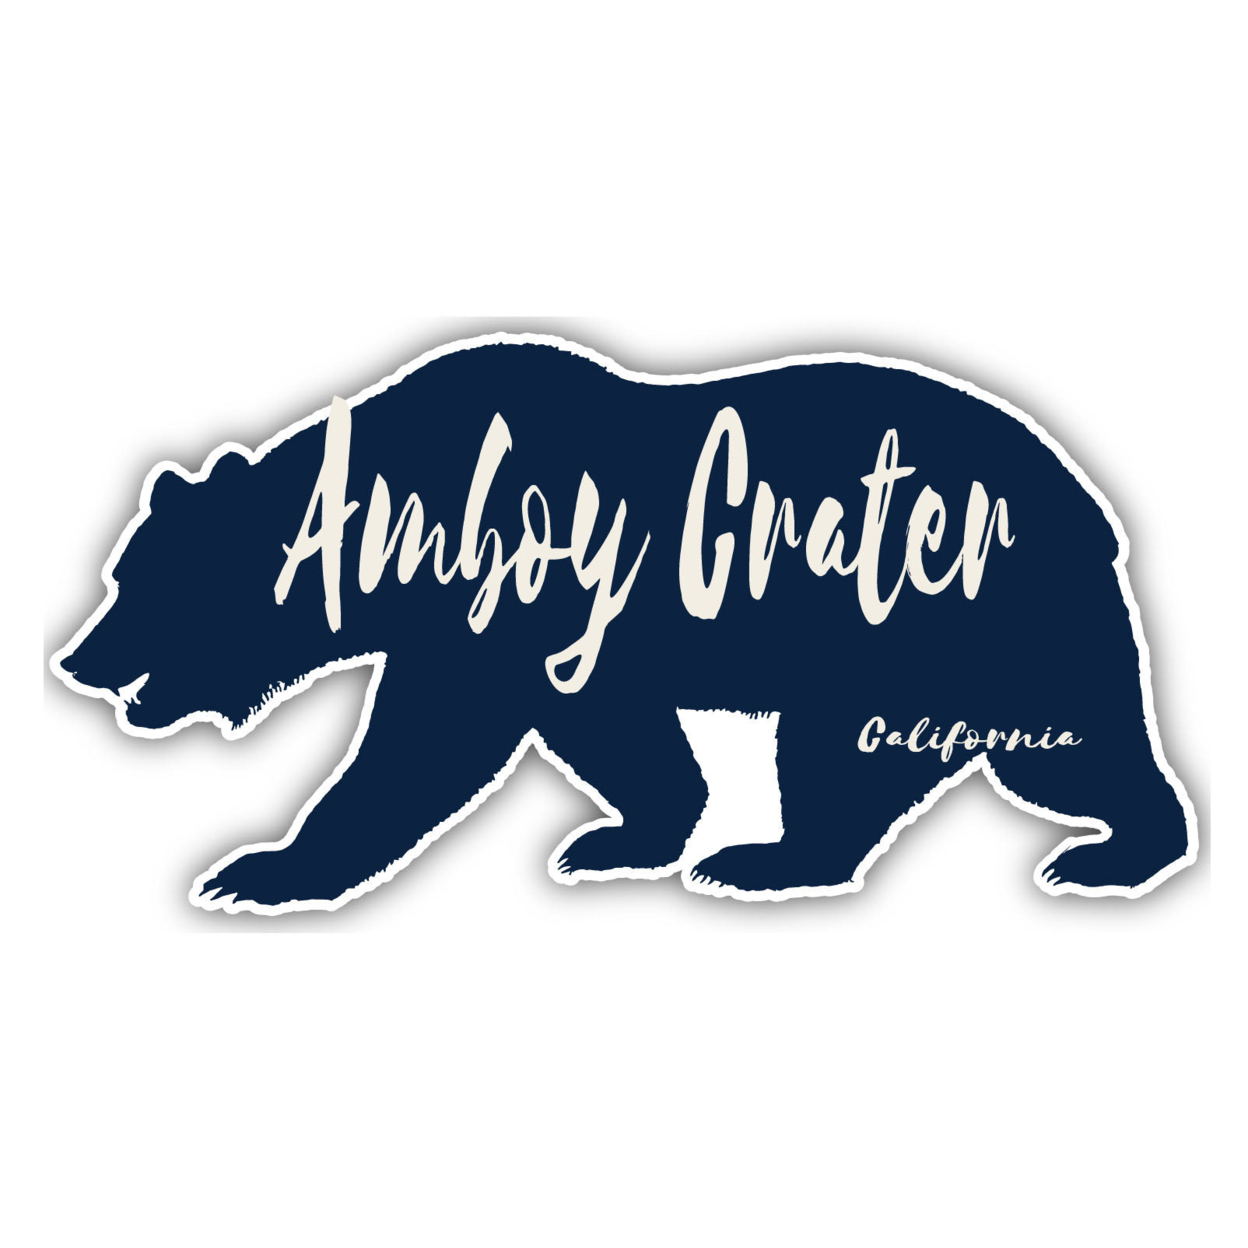 Amboy Crater California Souvenir Decorative Stickers (Choose Theme And Size) - Single Unit, 8-Inch, Bear